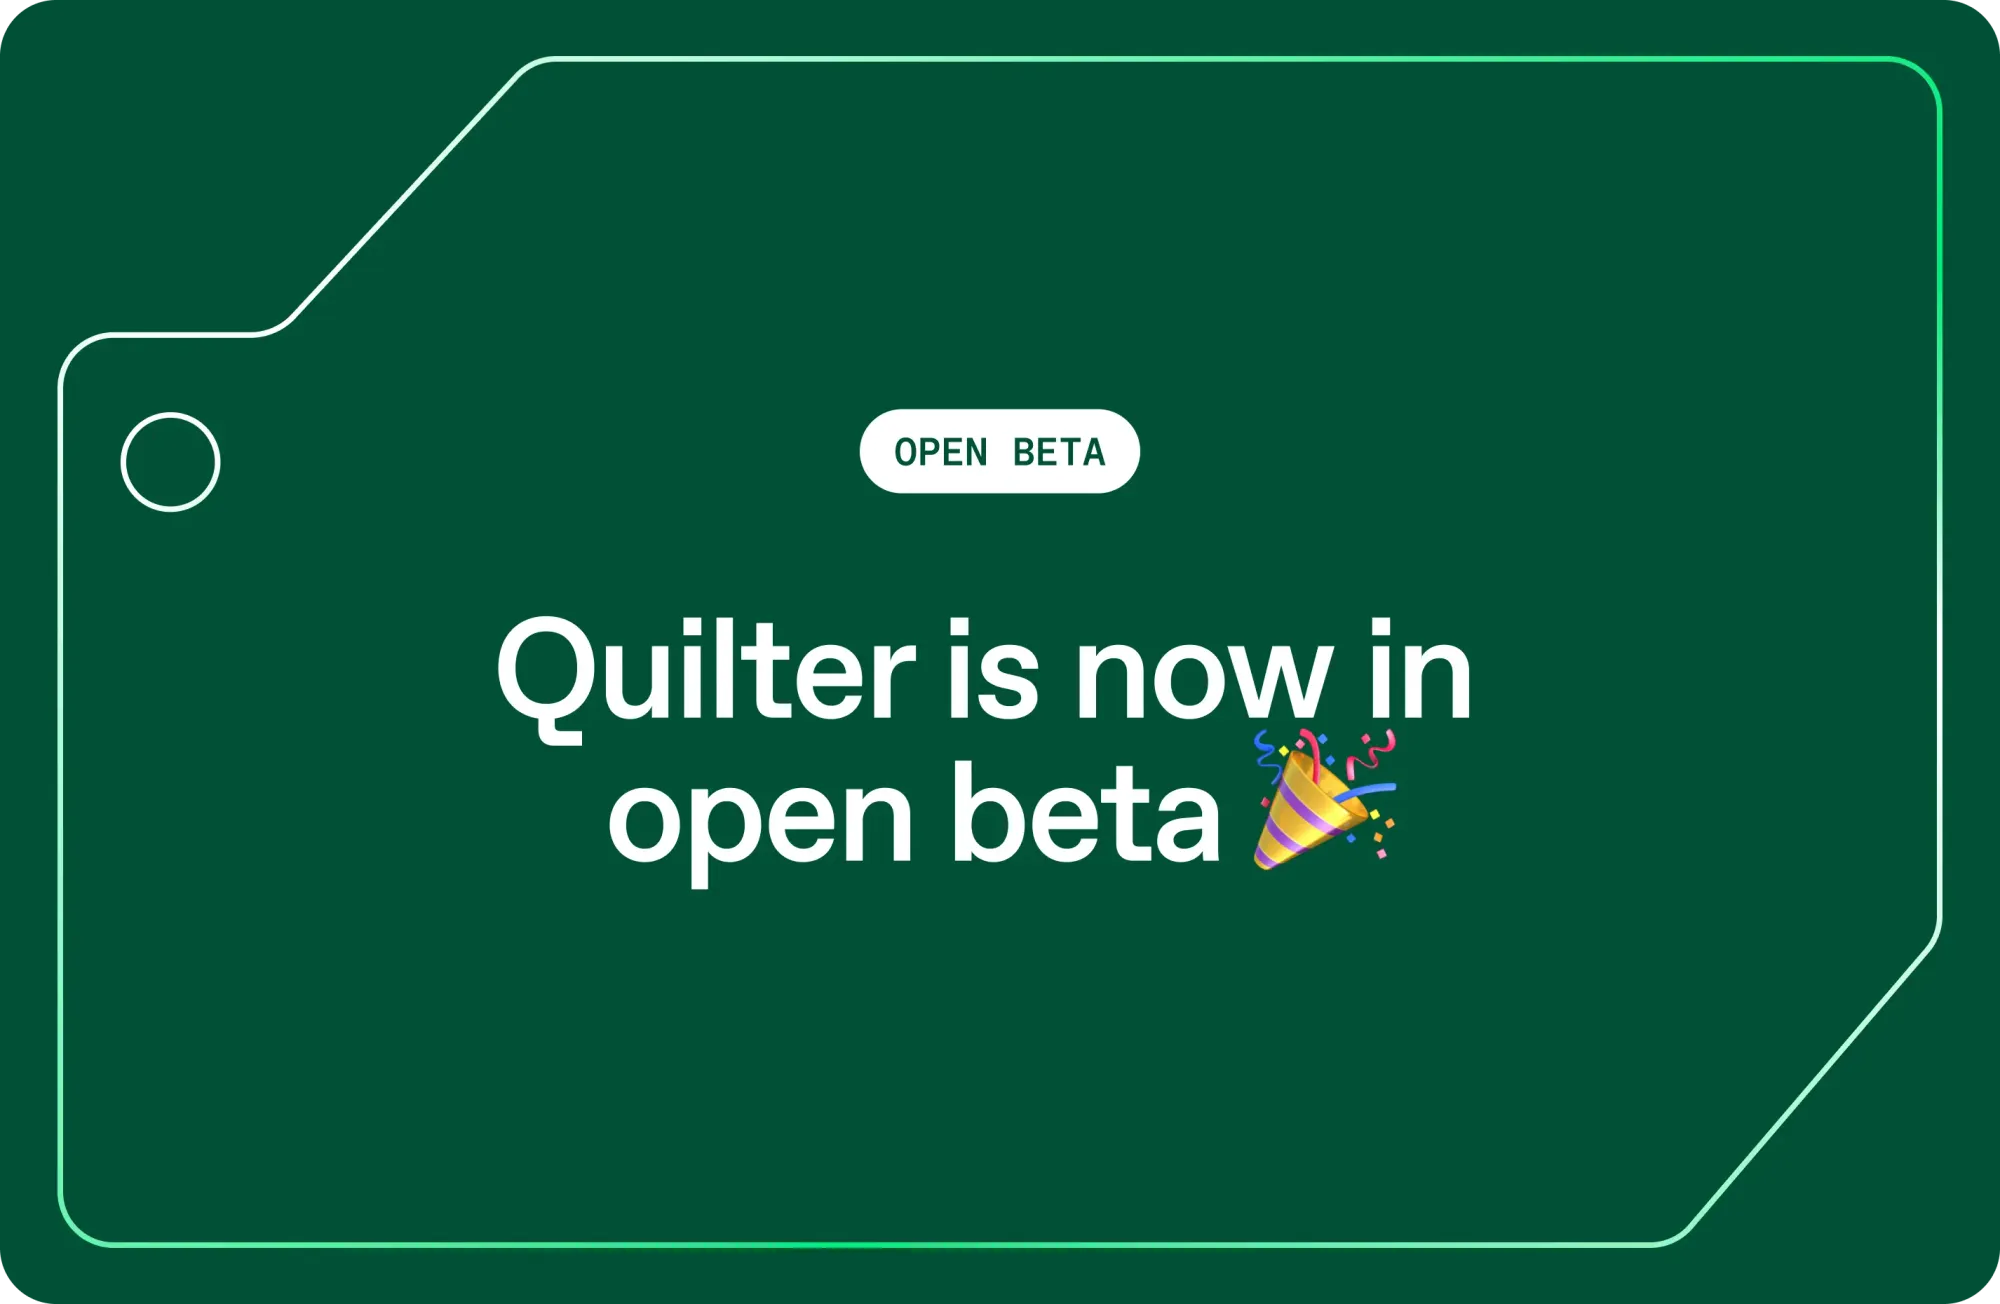 Quilter is now in open beta